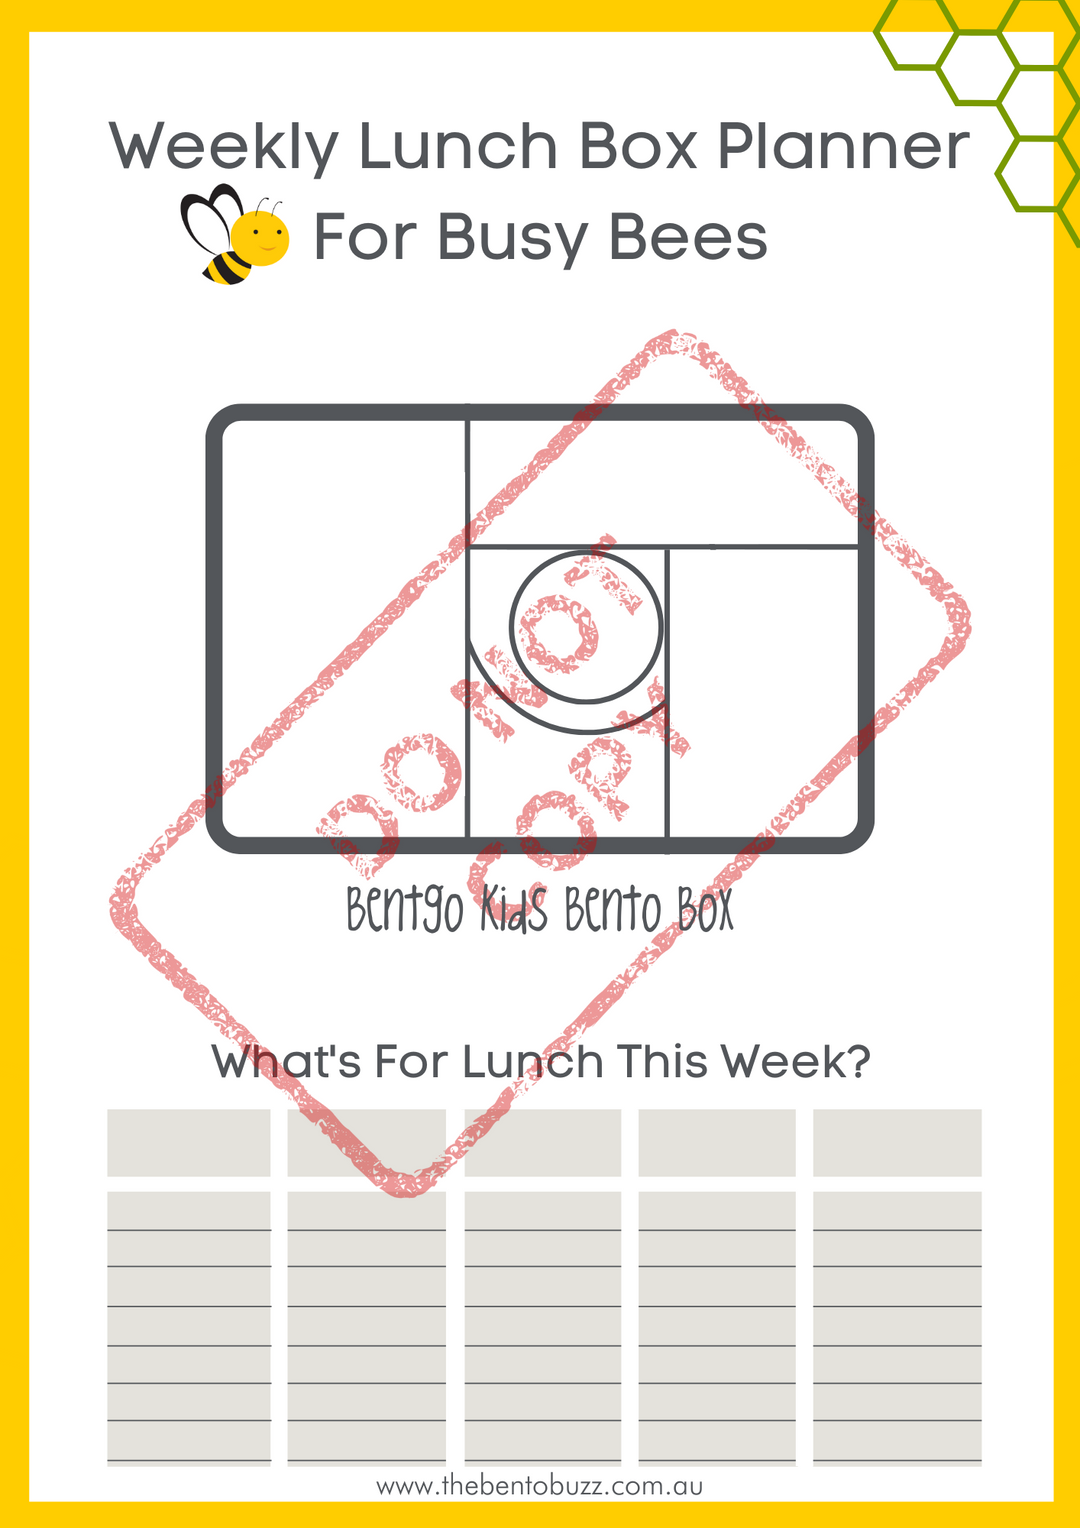 Download & Print Lunch Box Planner - Bentgo Kids